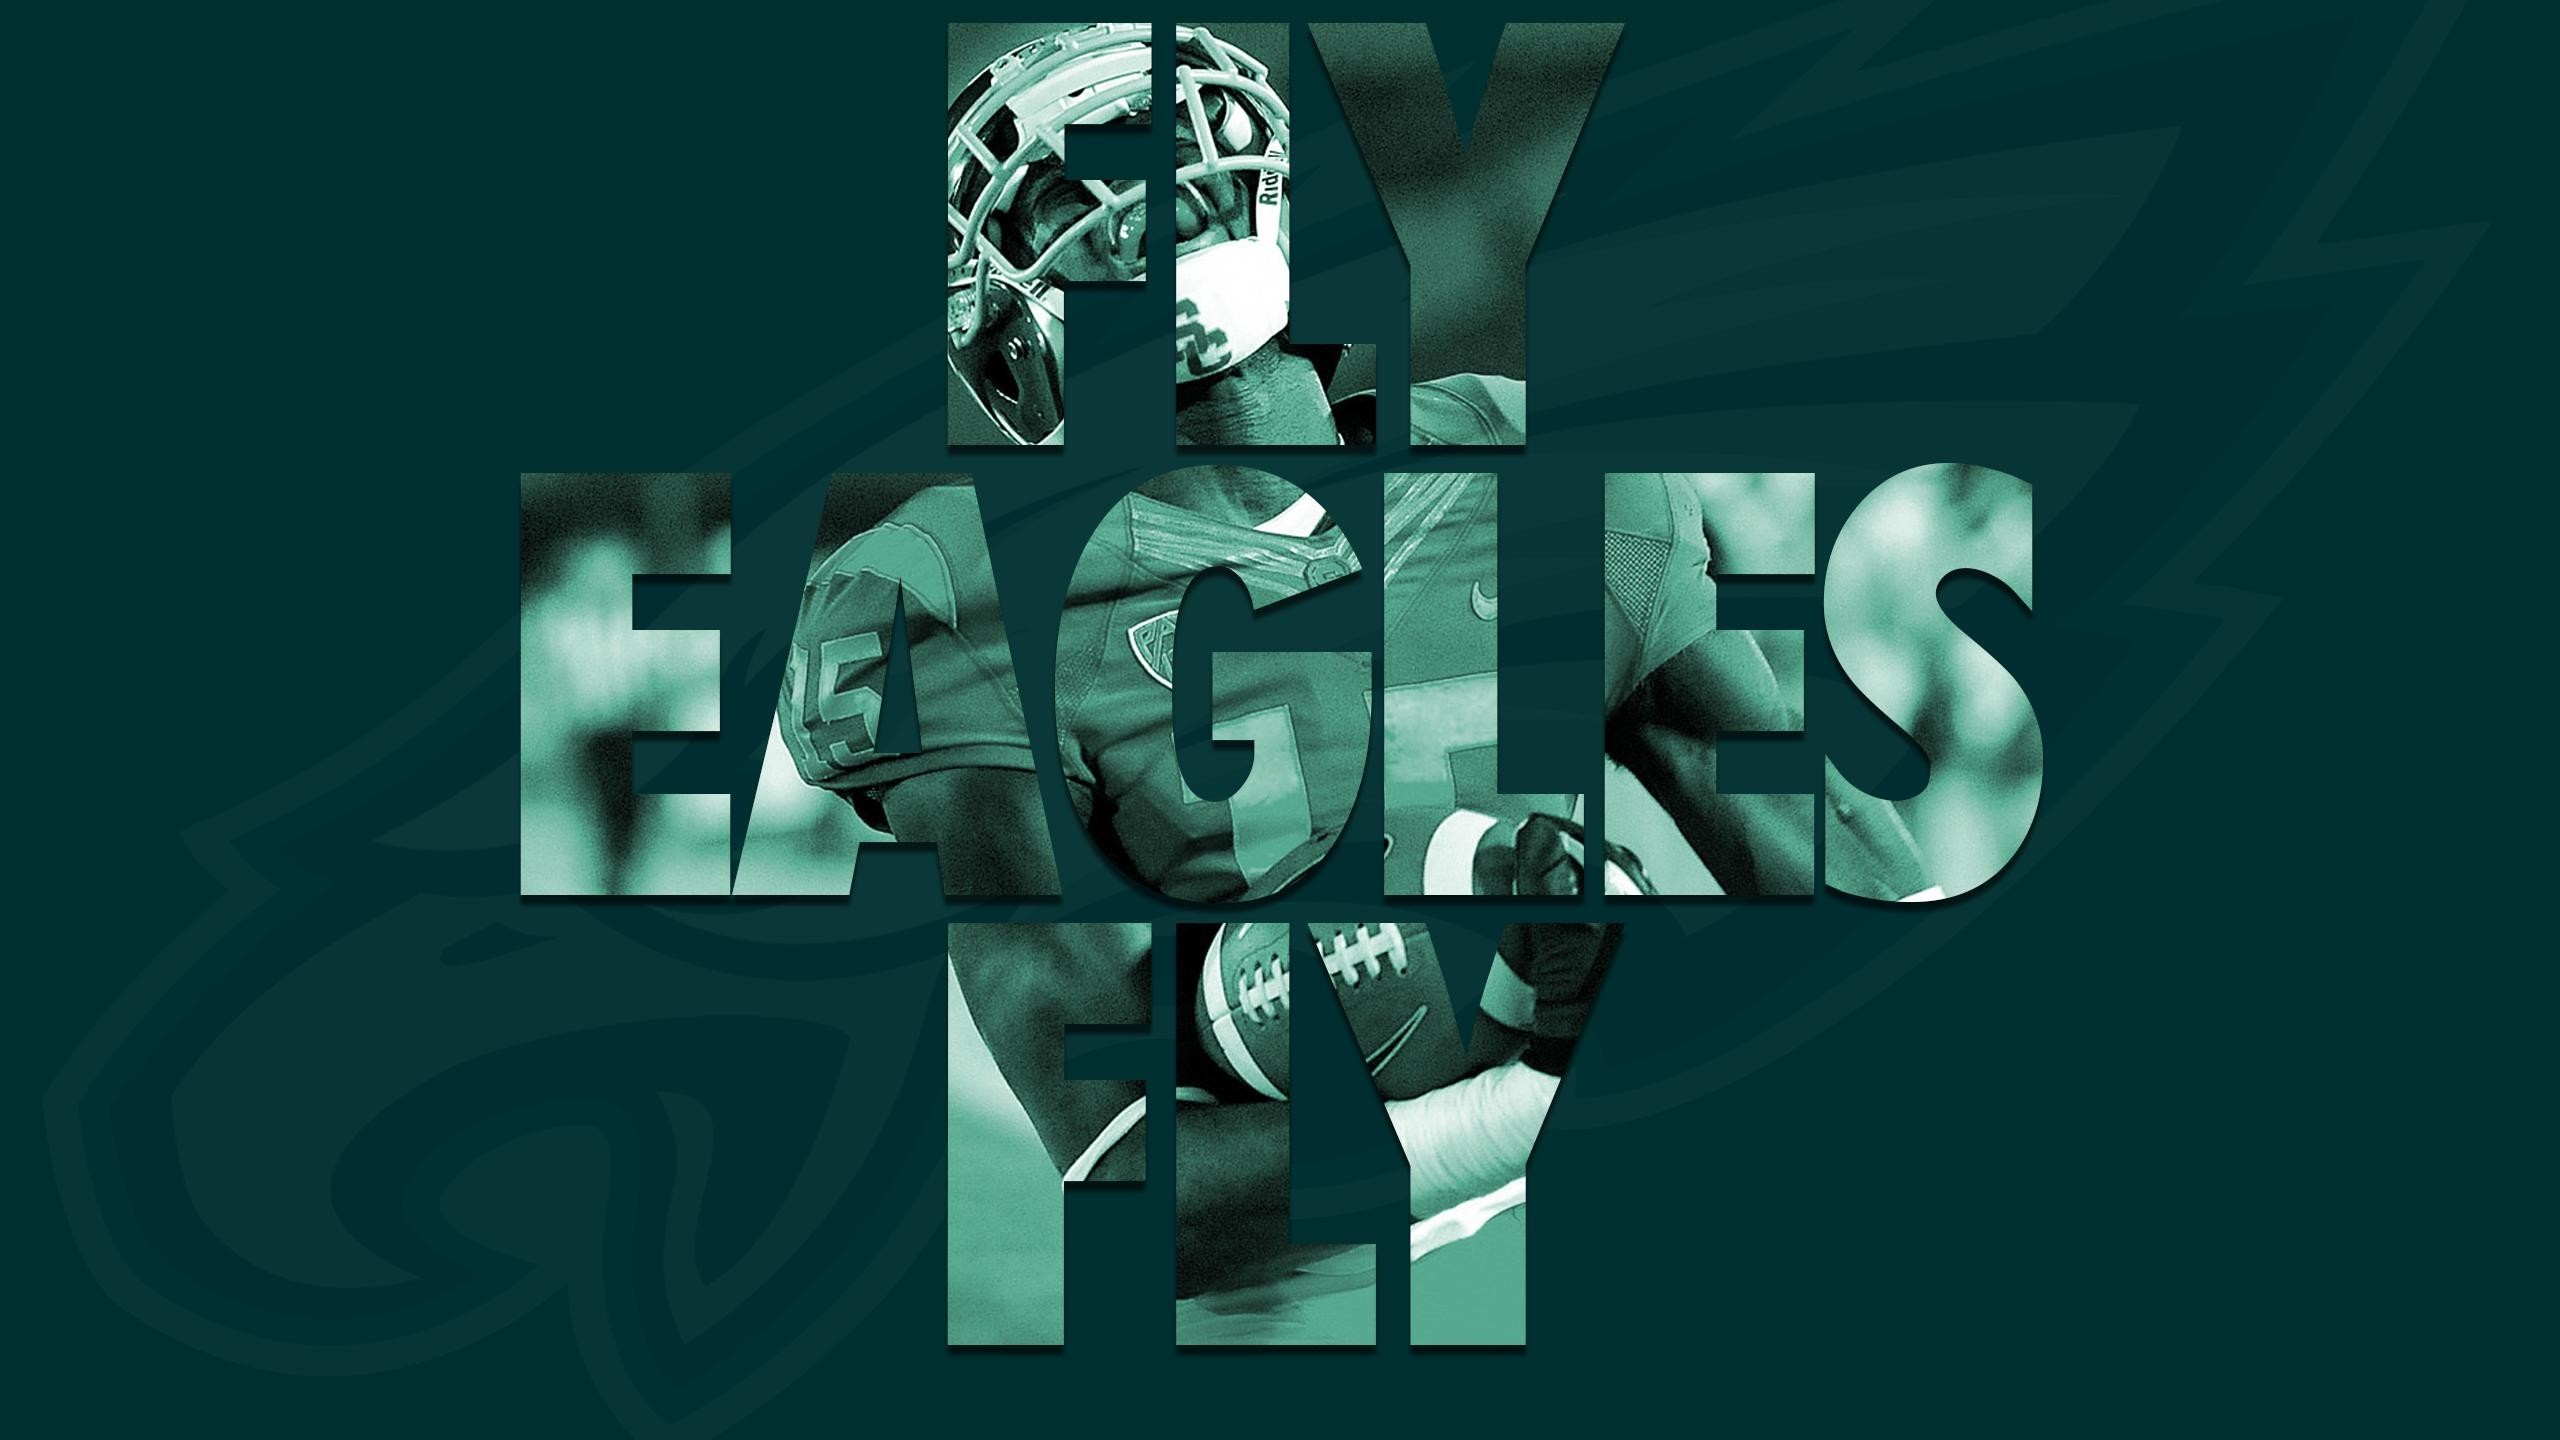 2560x1440 1920x1200 Picture Of Philadelphia Eagles Desktop Wallpaper. Picture Of  Philadelphia Eagles Desktop Wallpaper